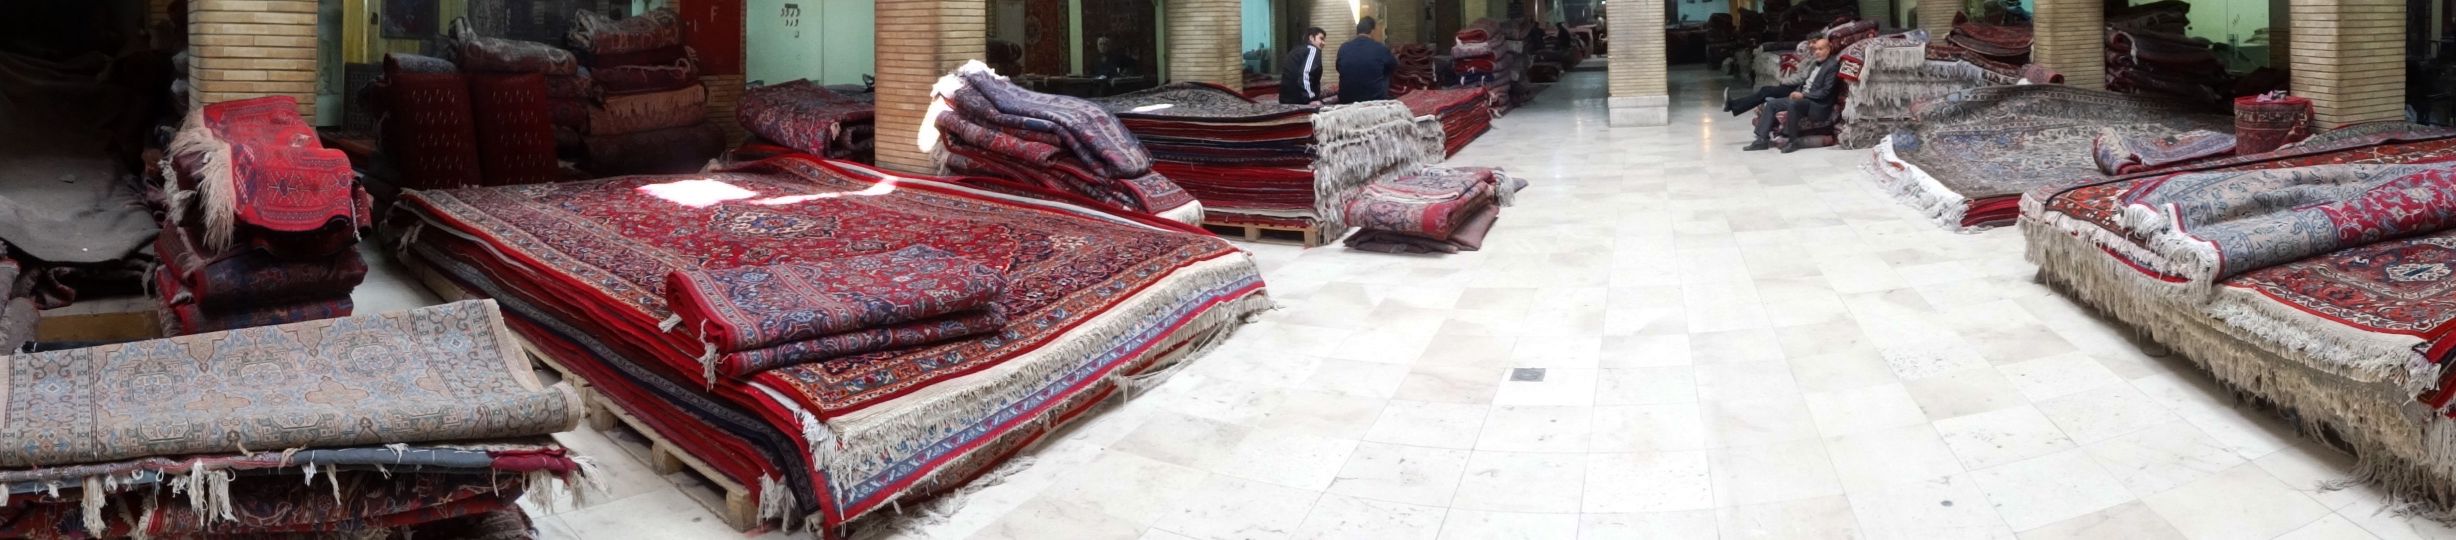 Tabriz bazaar - carpets everywhere